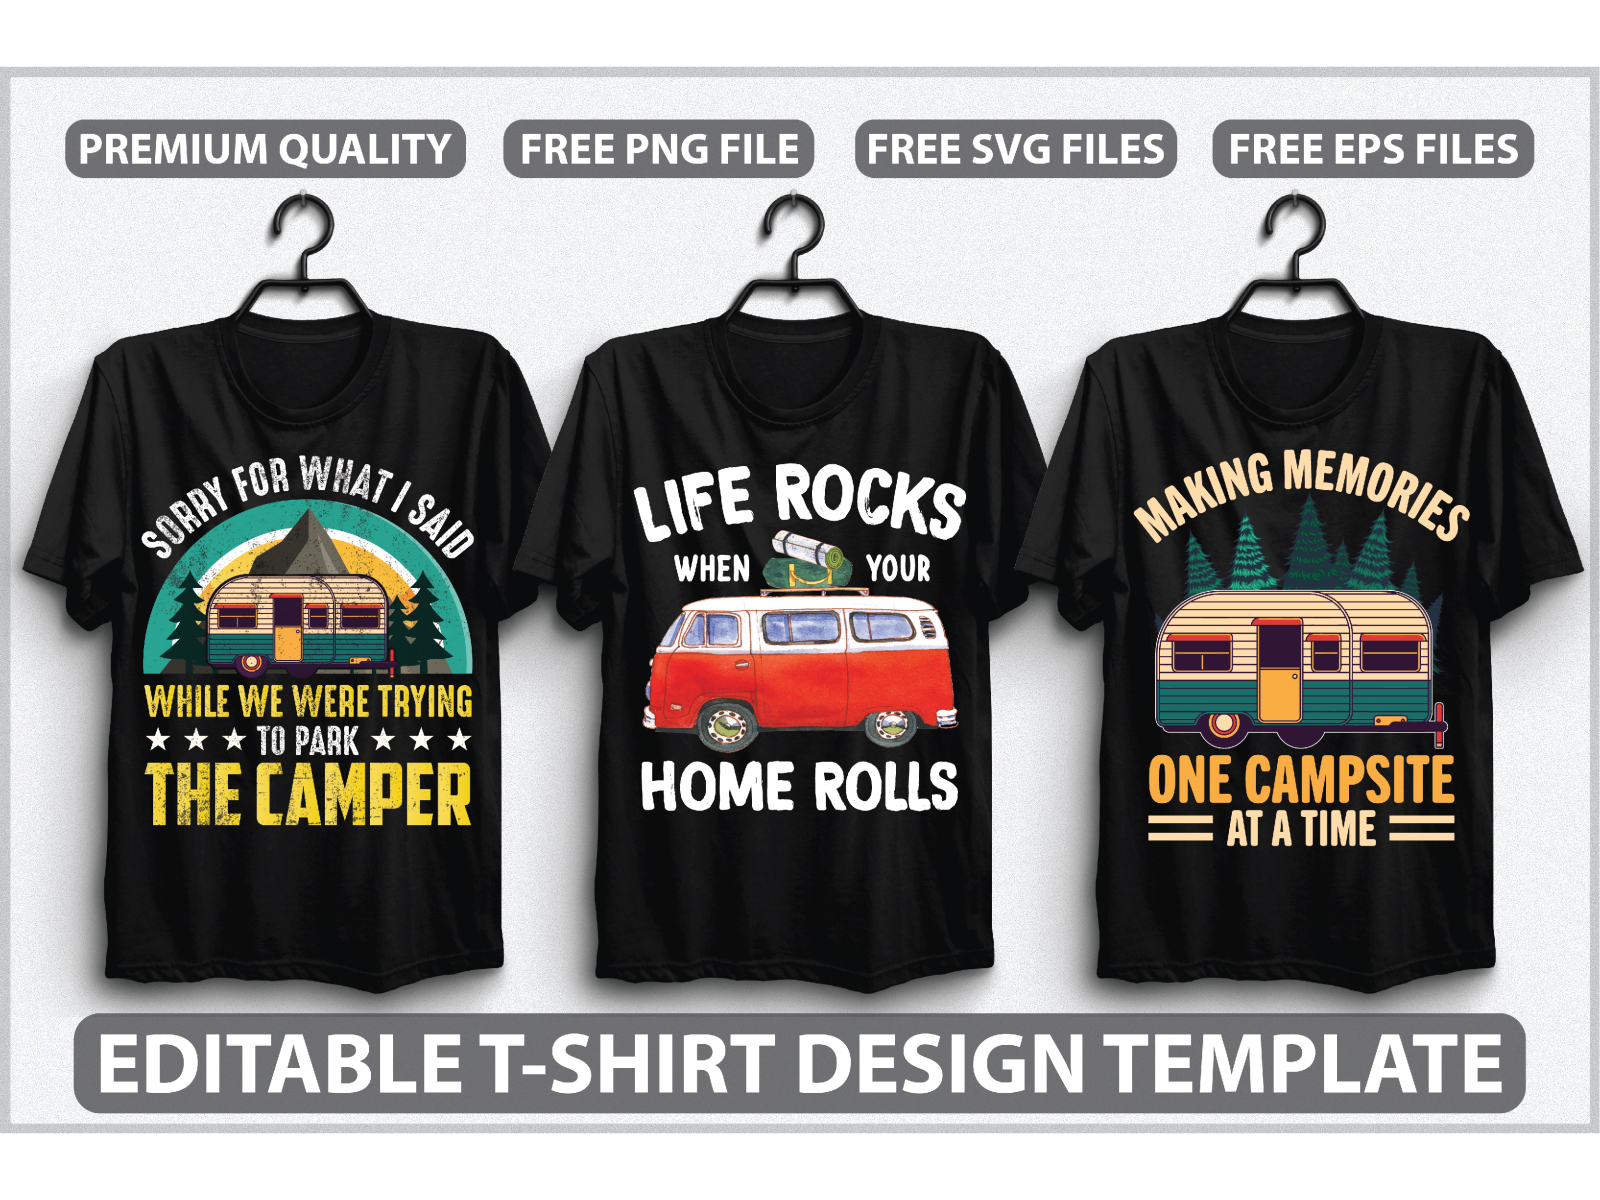 editable-t-shirt-design-template-vol-2-by-md-ashik-khan-on-dribbble